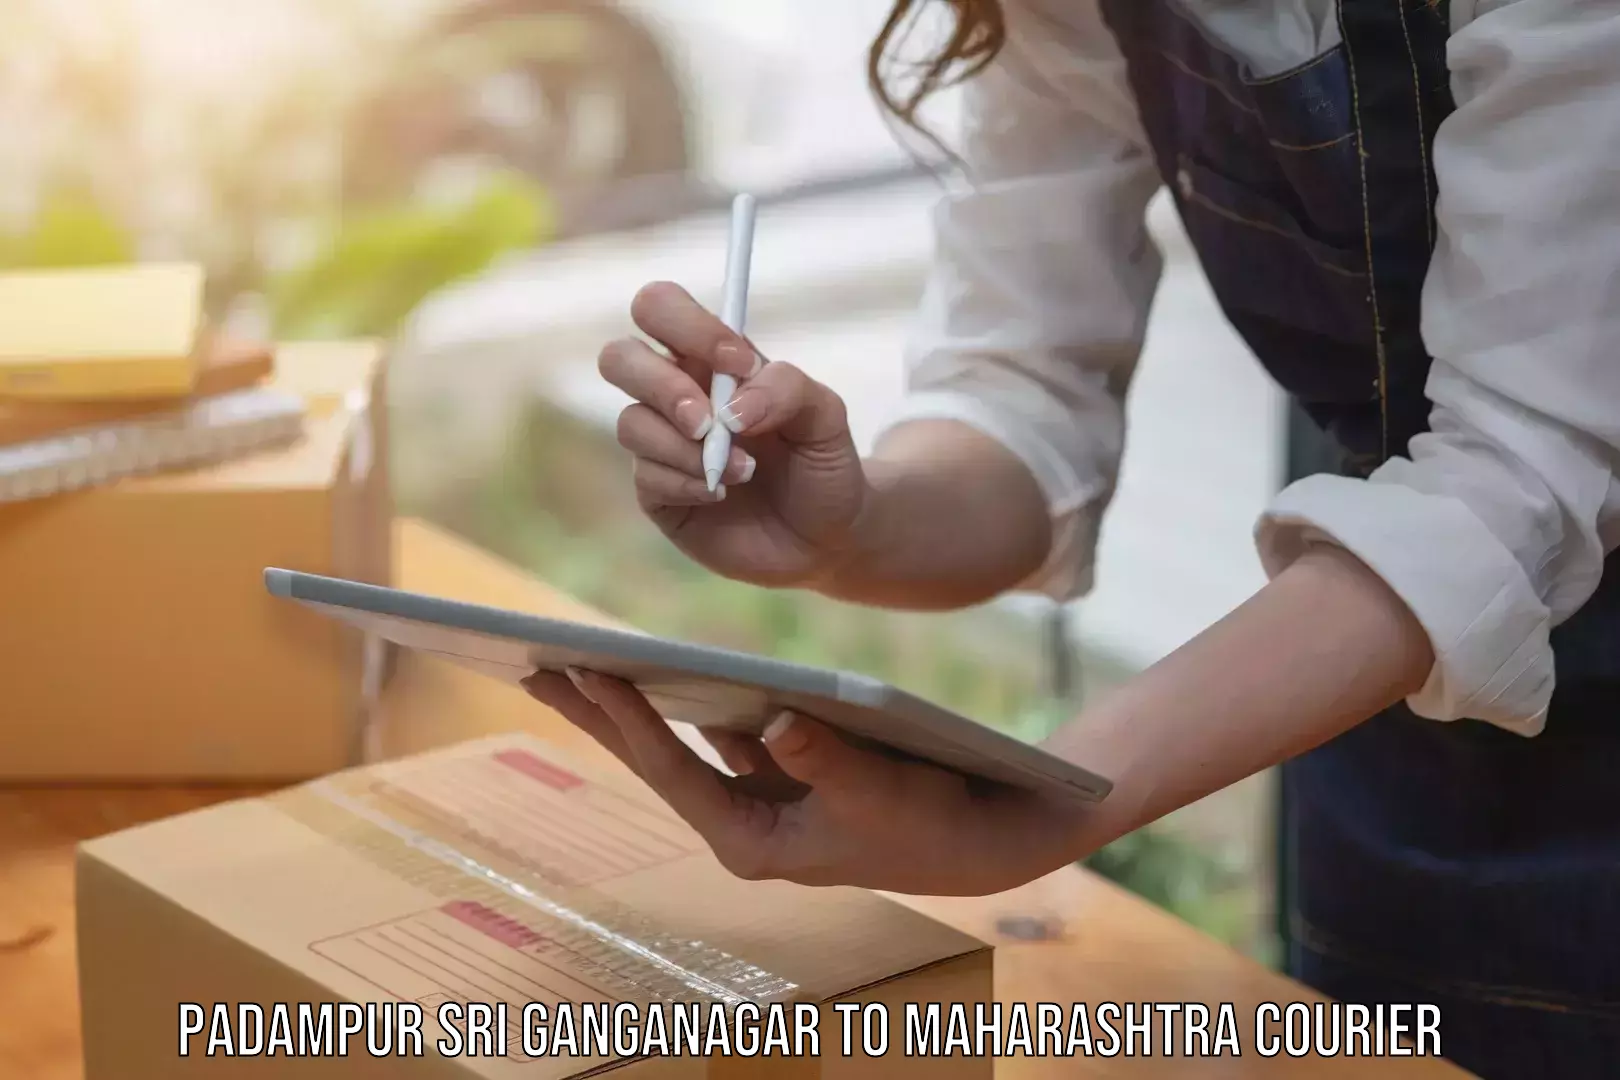 Sustainable courier practices Padampur Sri Ganganagar to Maharashtra